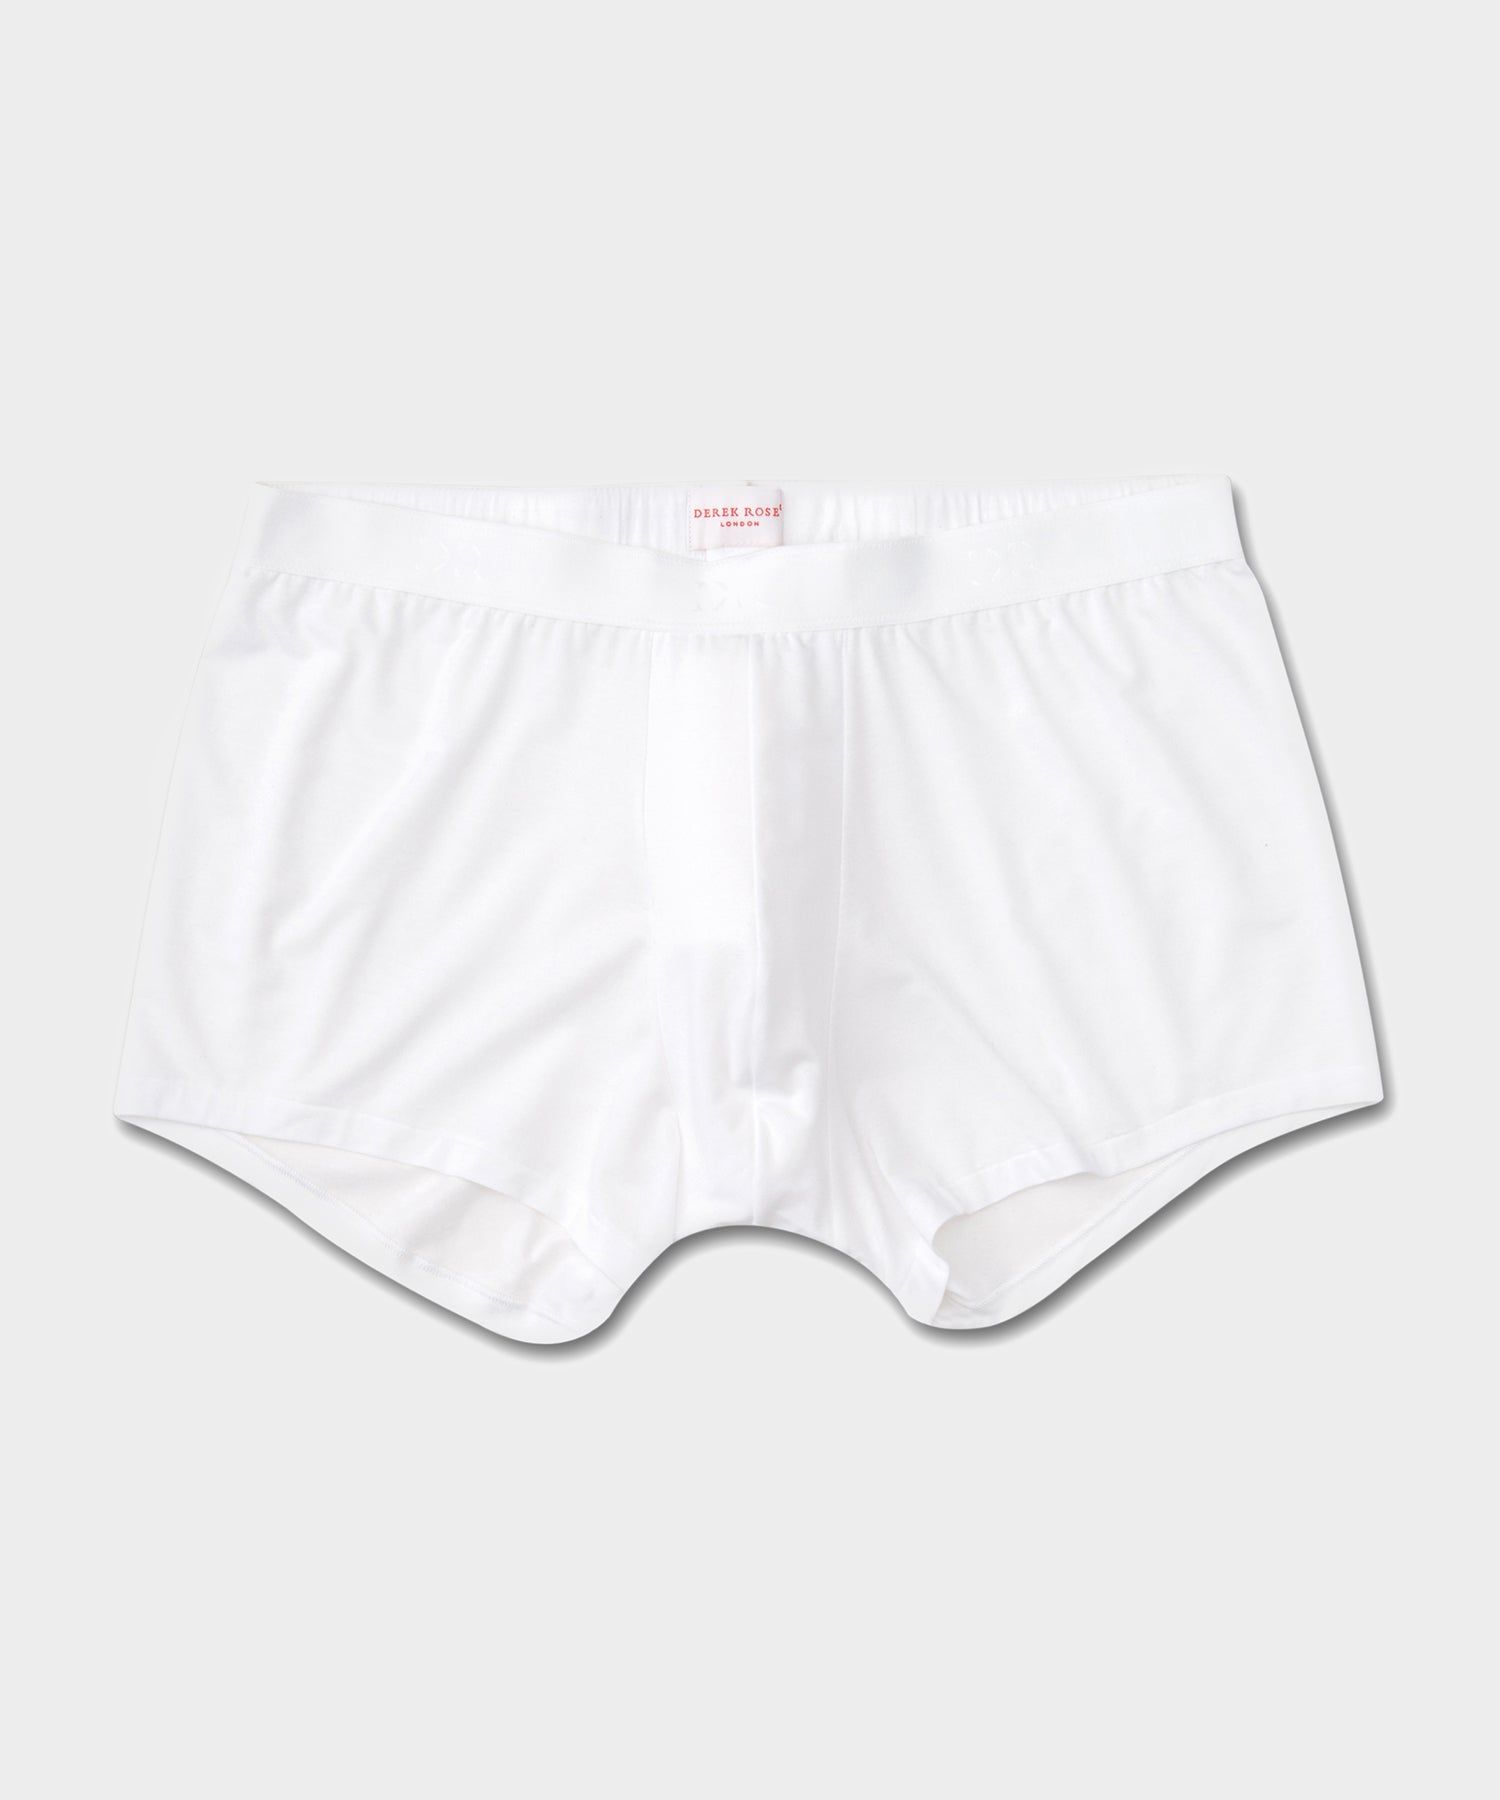 Jojogood Mens Corn Stalk Breathable Boxer Soft Briefs Classic Underwear Shorts 